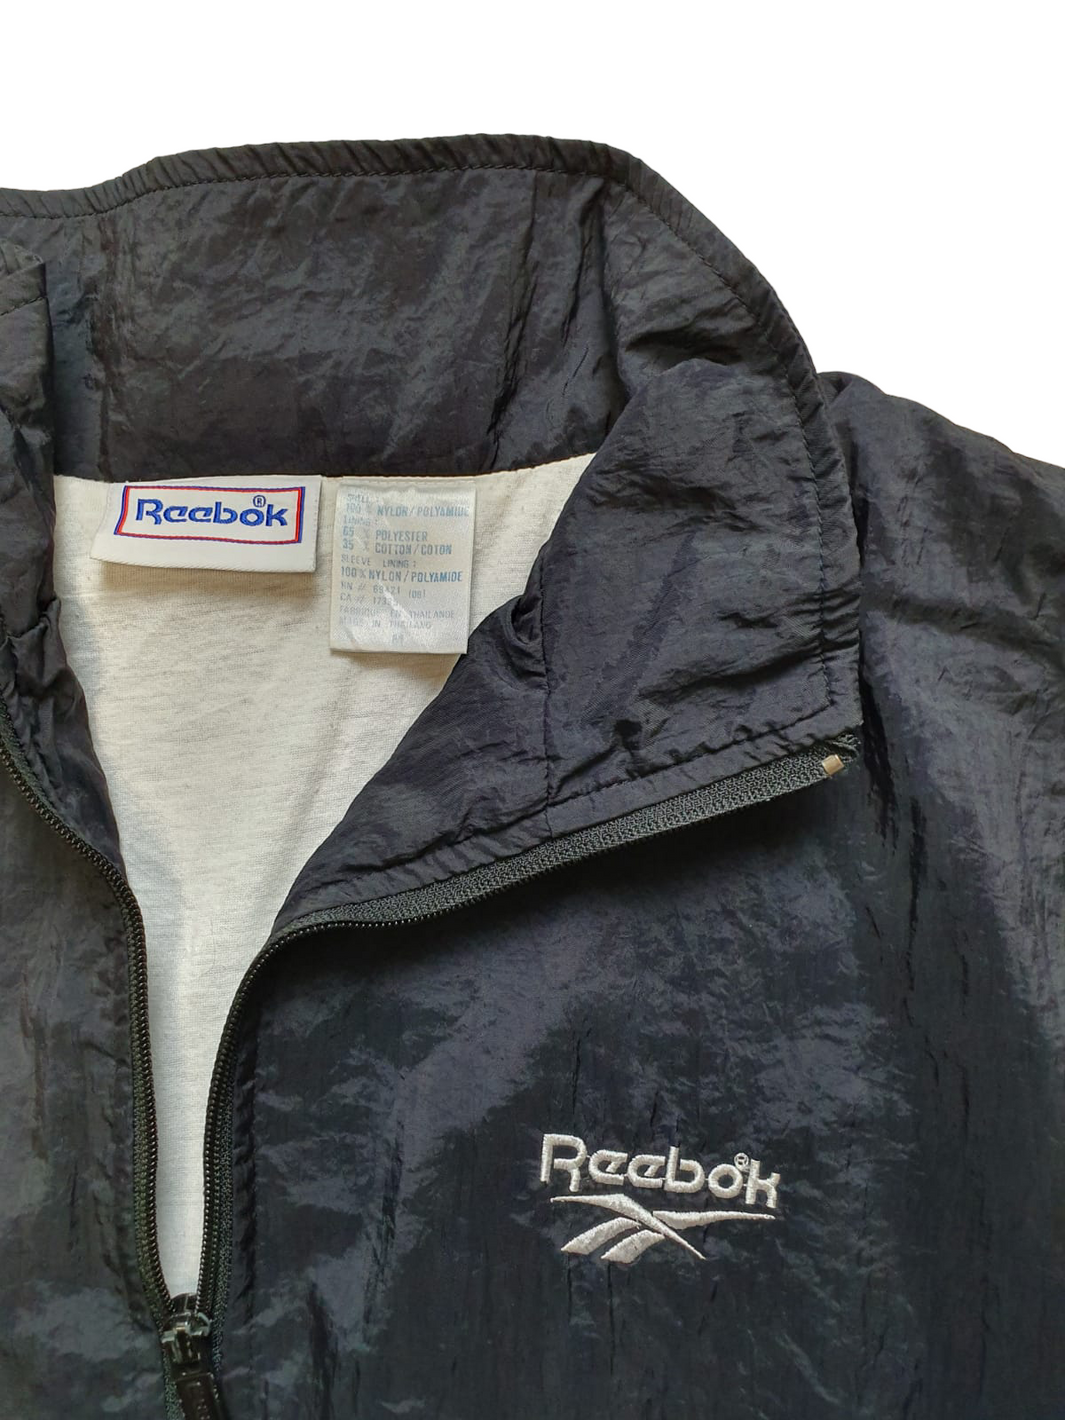 Reebok Track Jacket 90s